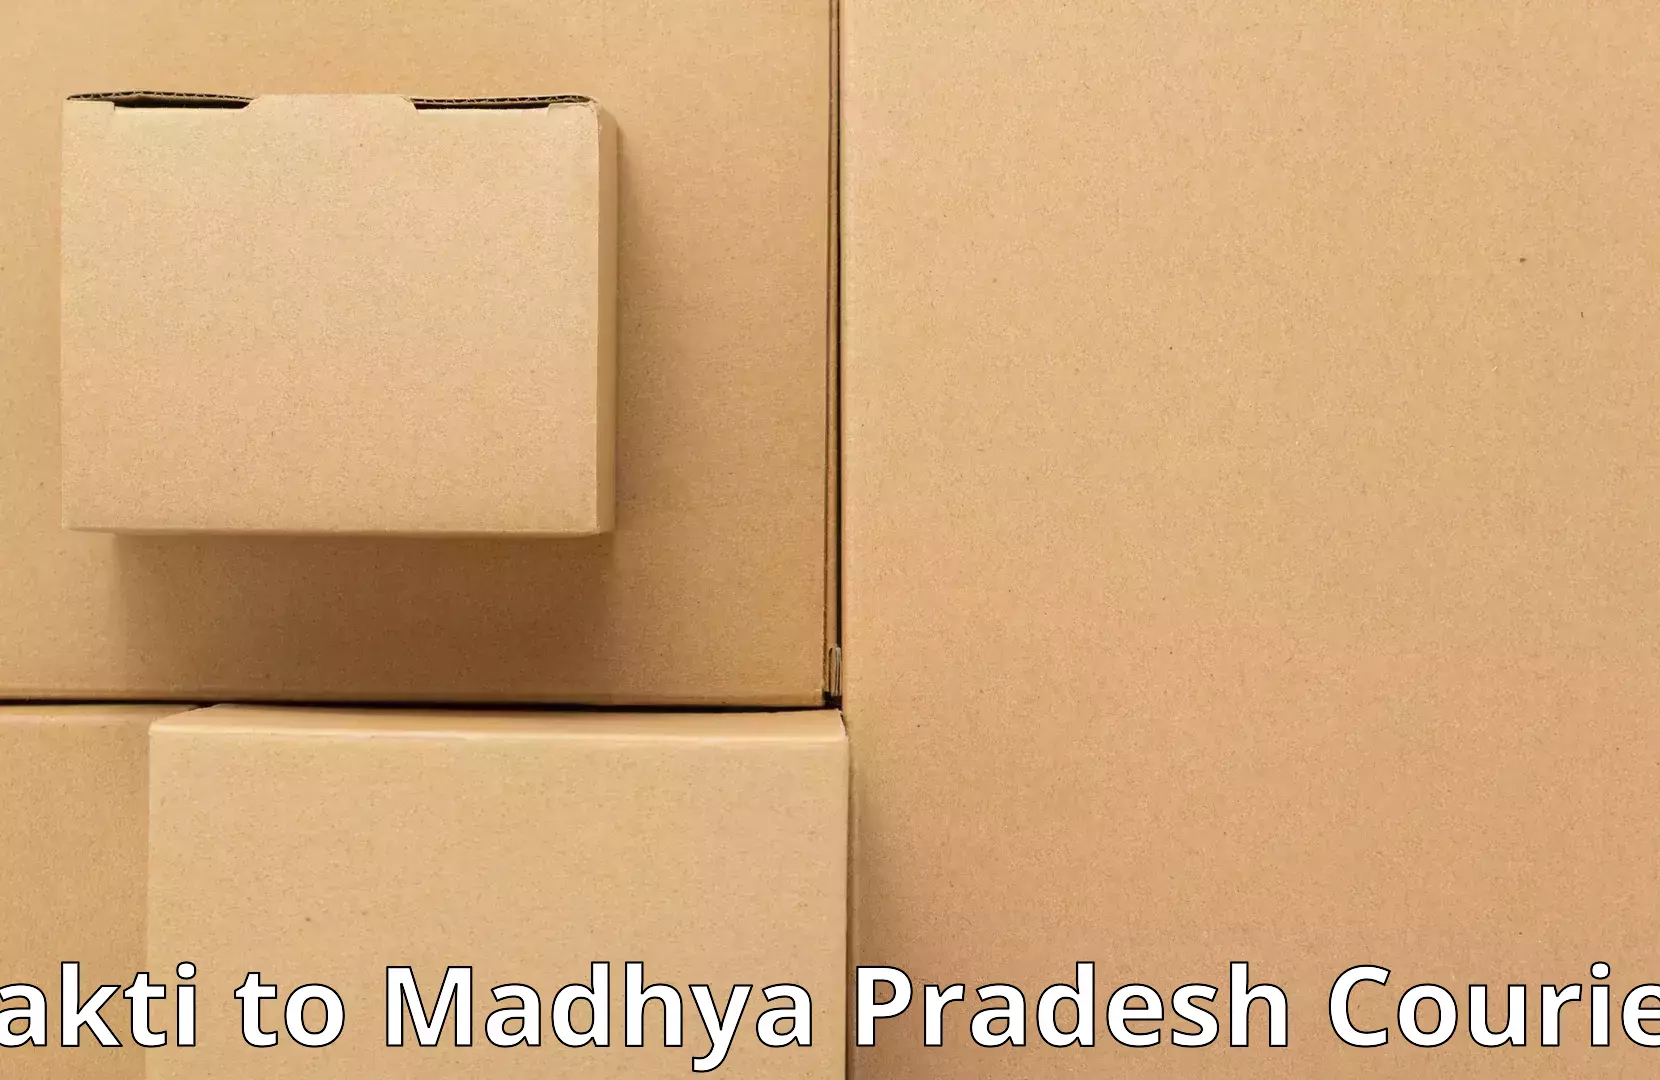 Home shifting experts Sakti to Madhya Pradesh